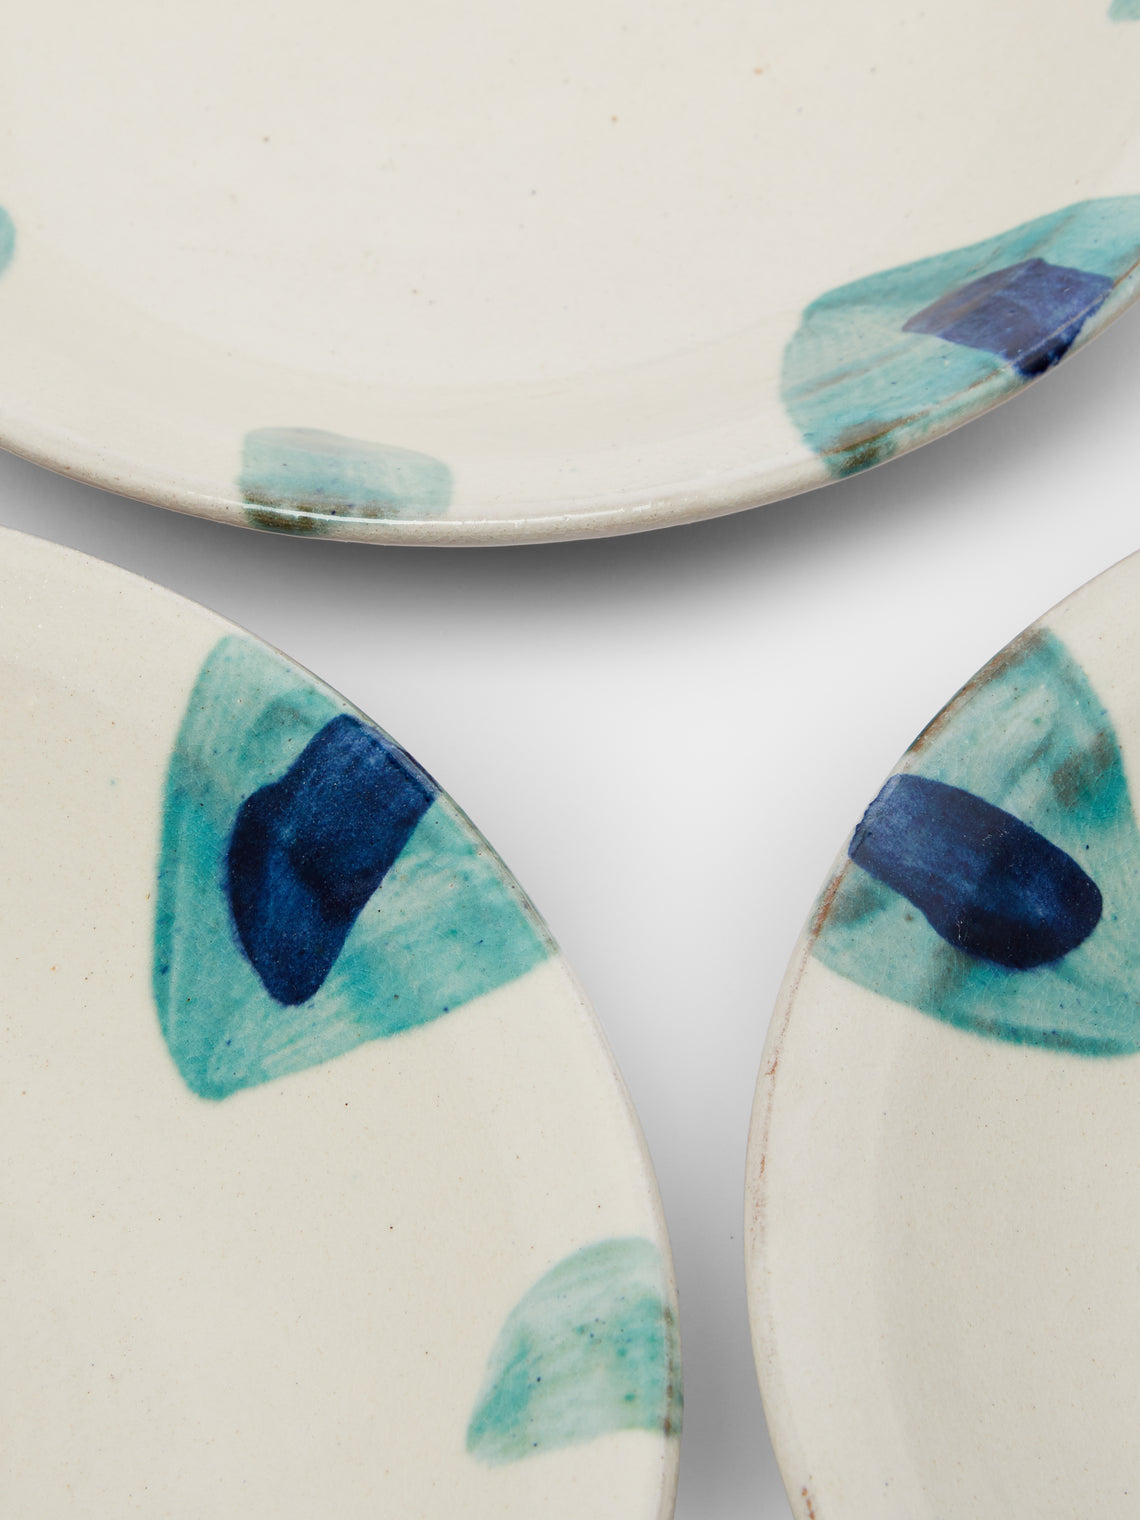 Malaika - Wadi Hand-Painted Deep Plates (Set of 4) - Blue - ABASK